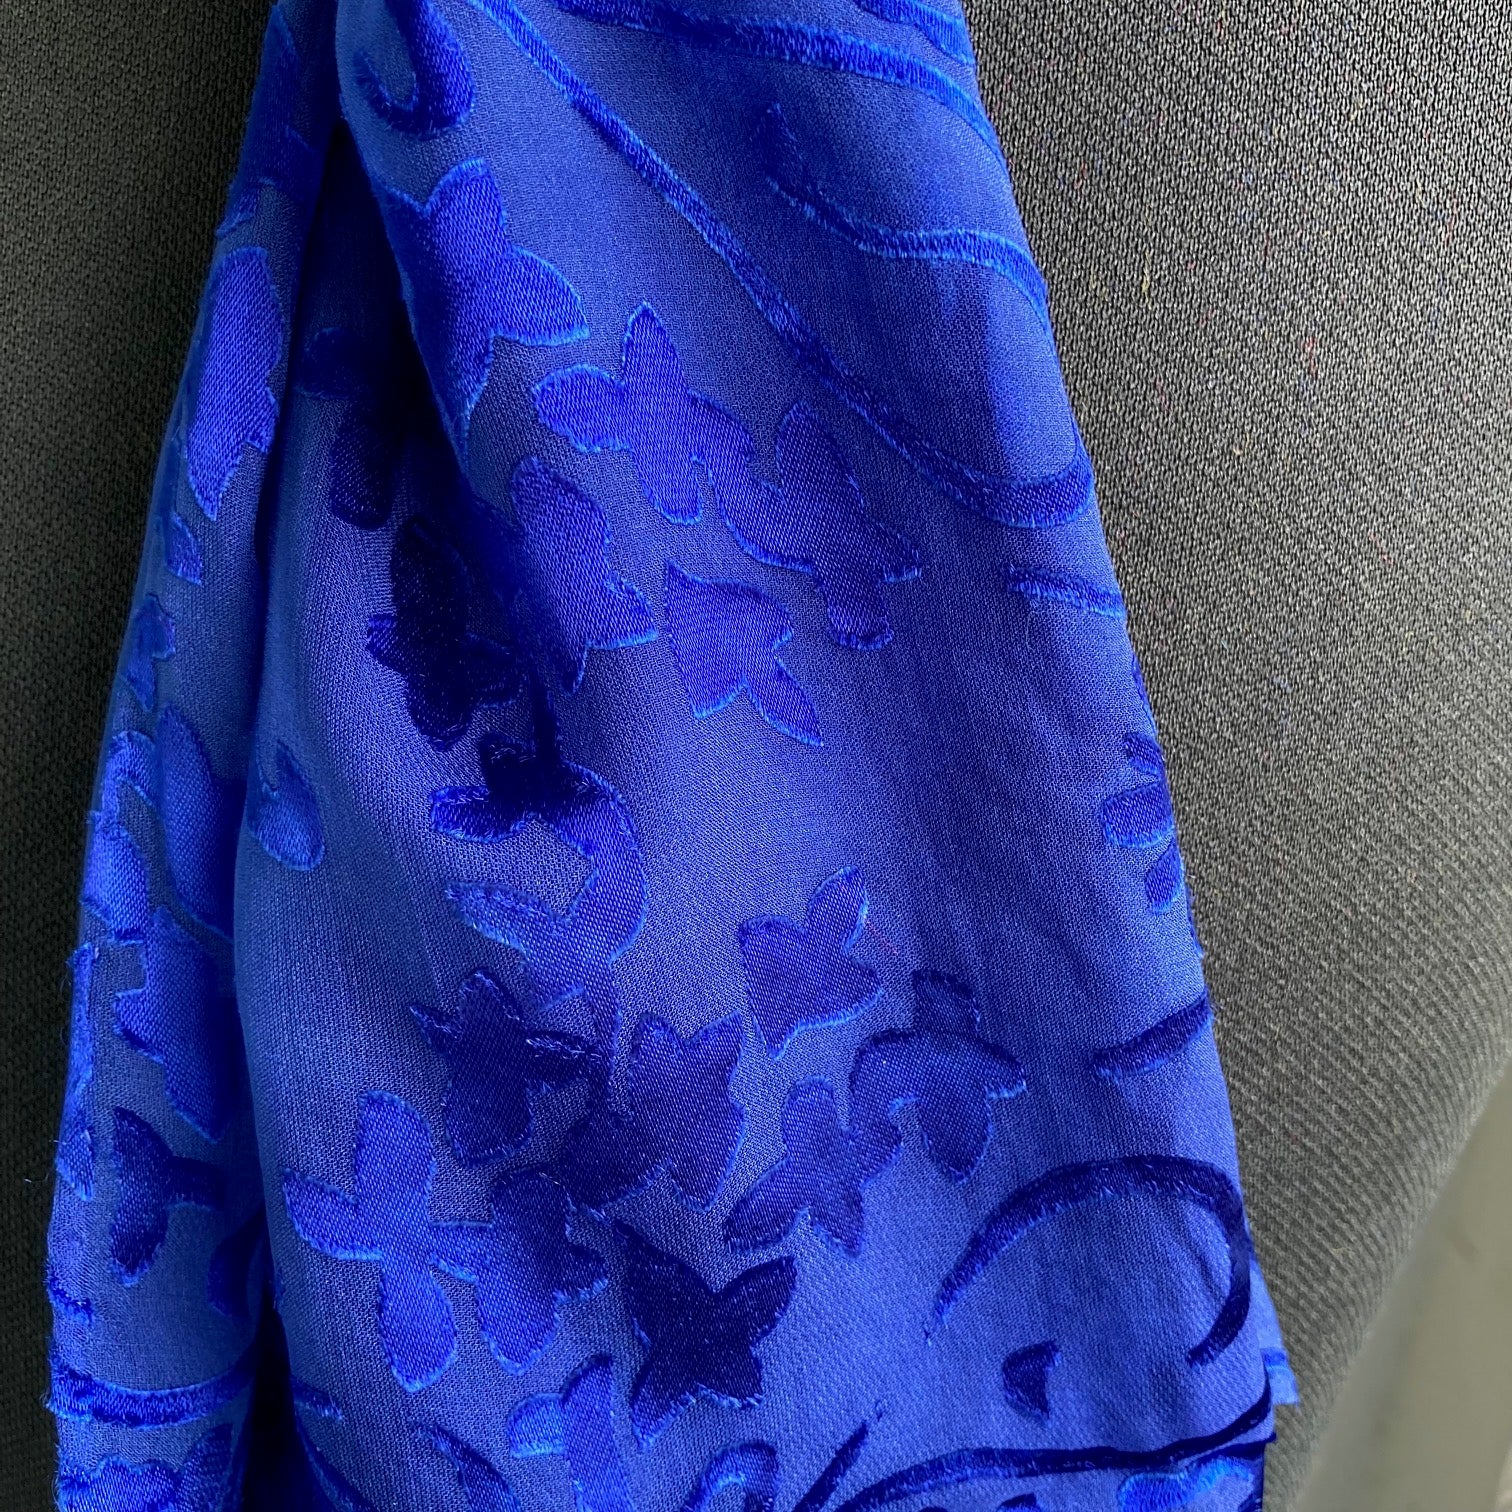 Devore Silk & Rayon Scarf in Royal Blue in the Art Noveau Design